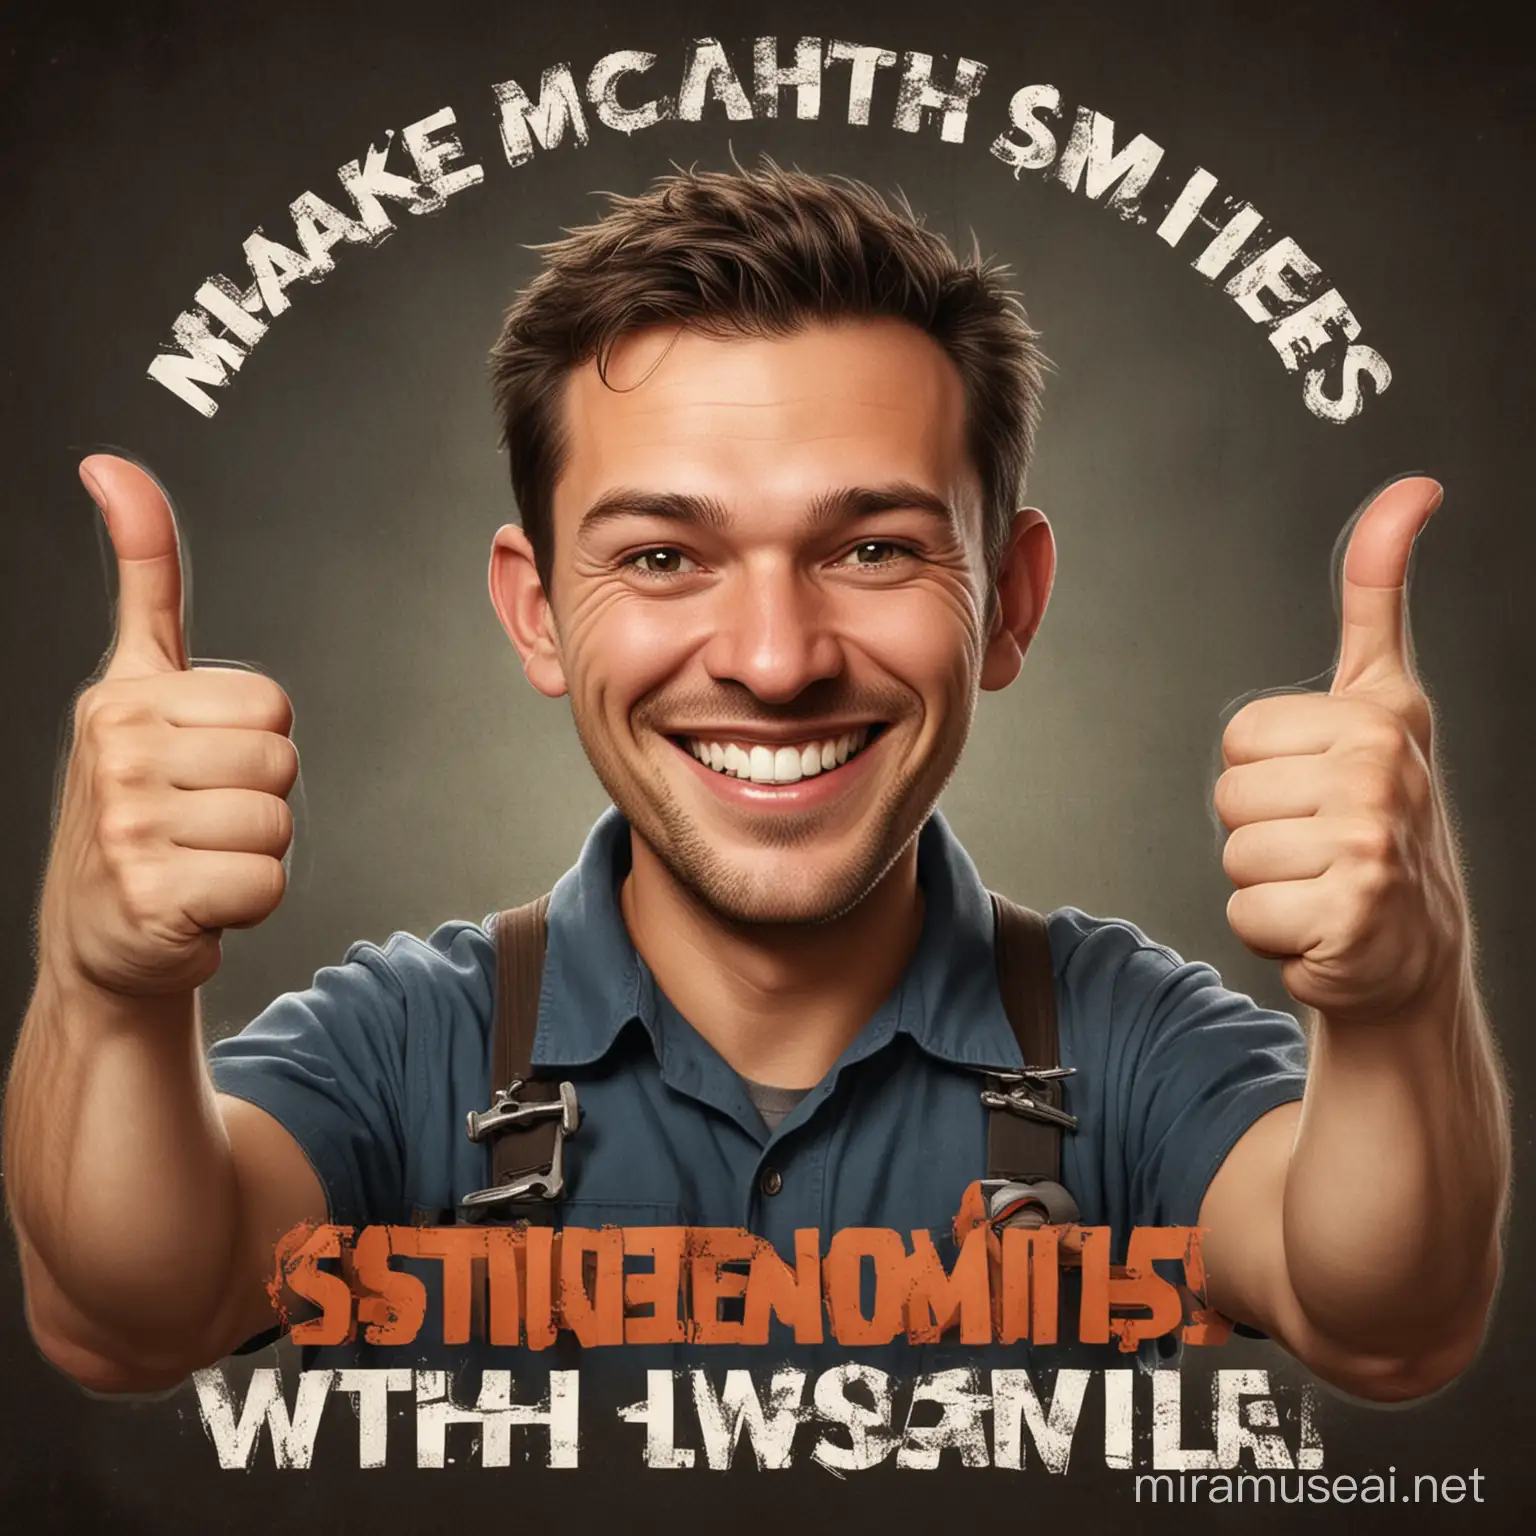 Make a mechanic with 2 thumbs who smiles
